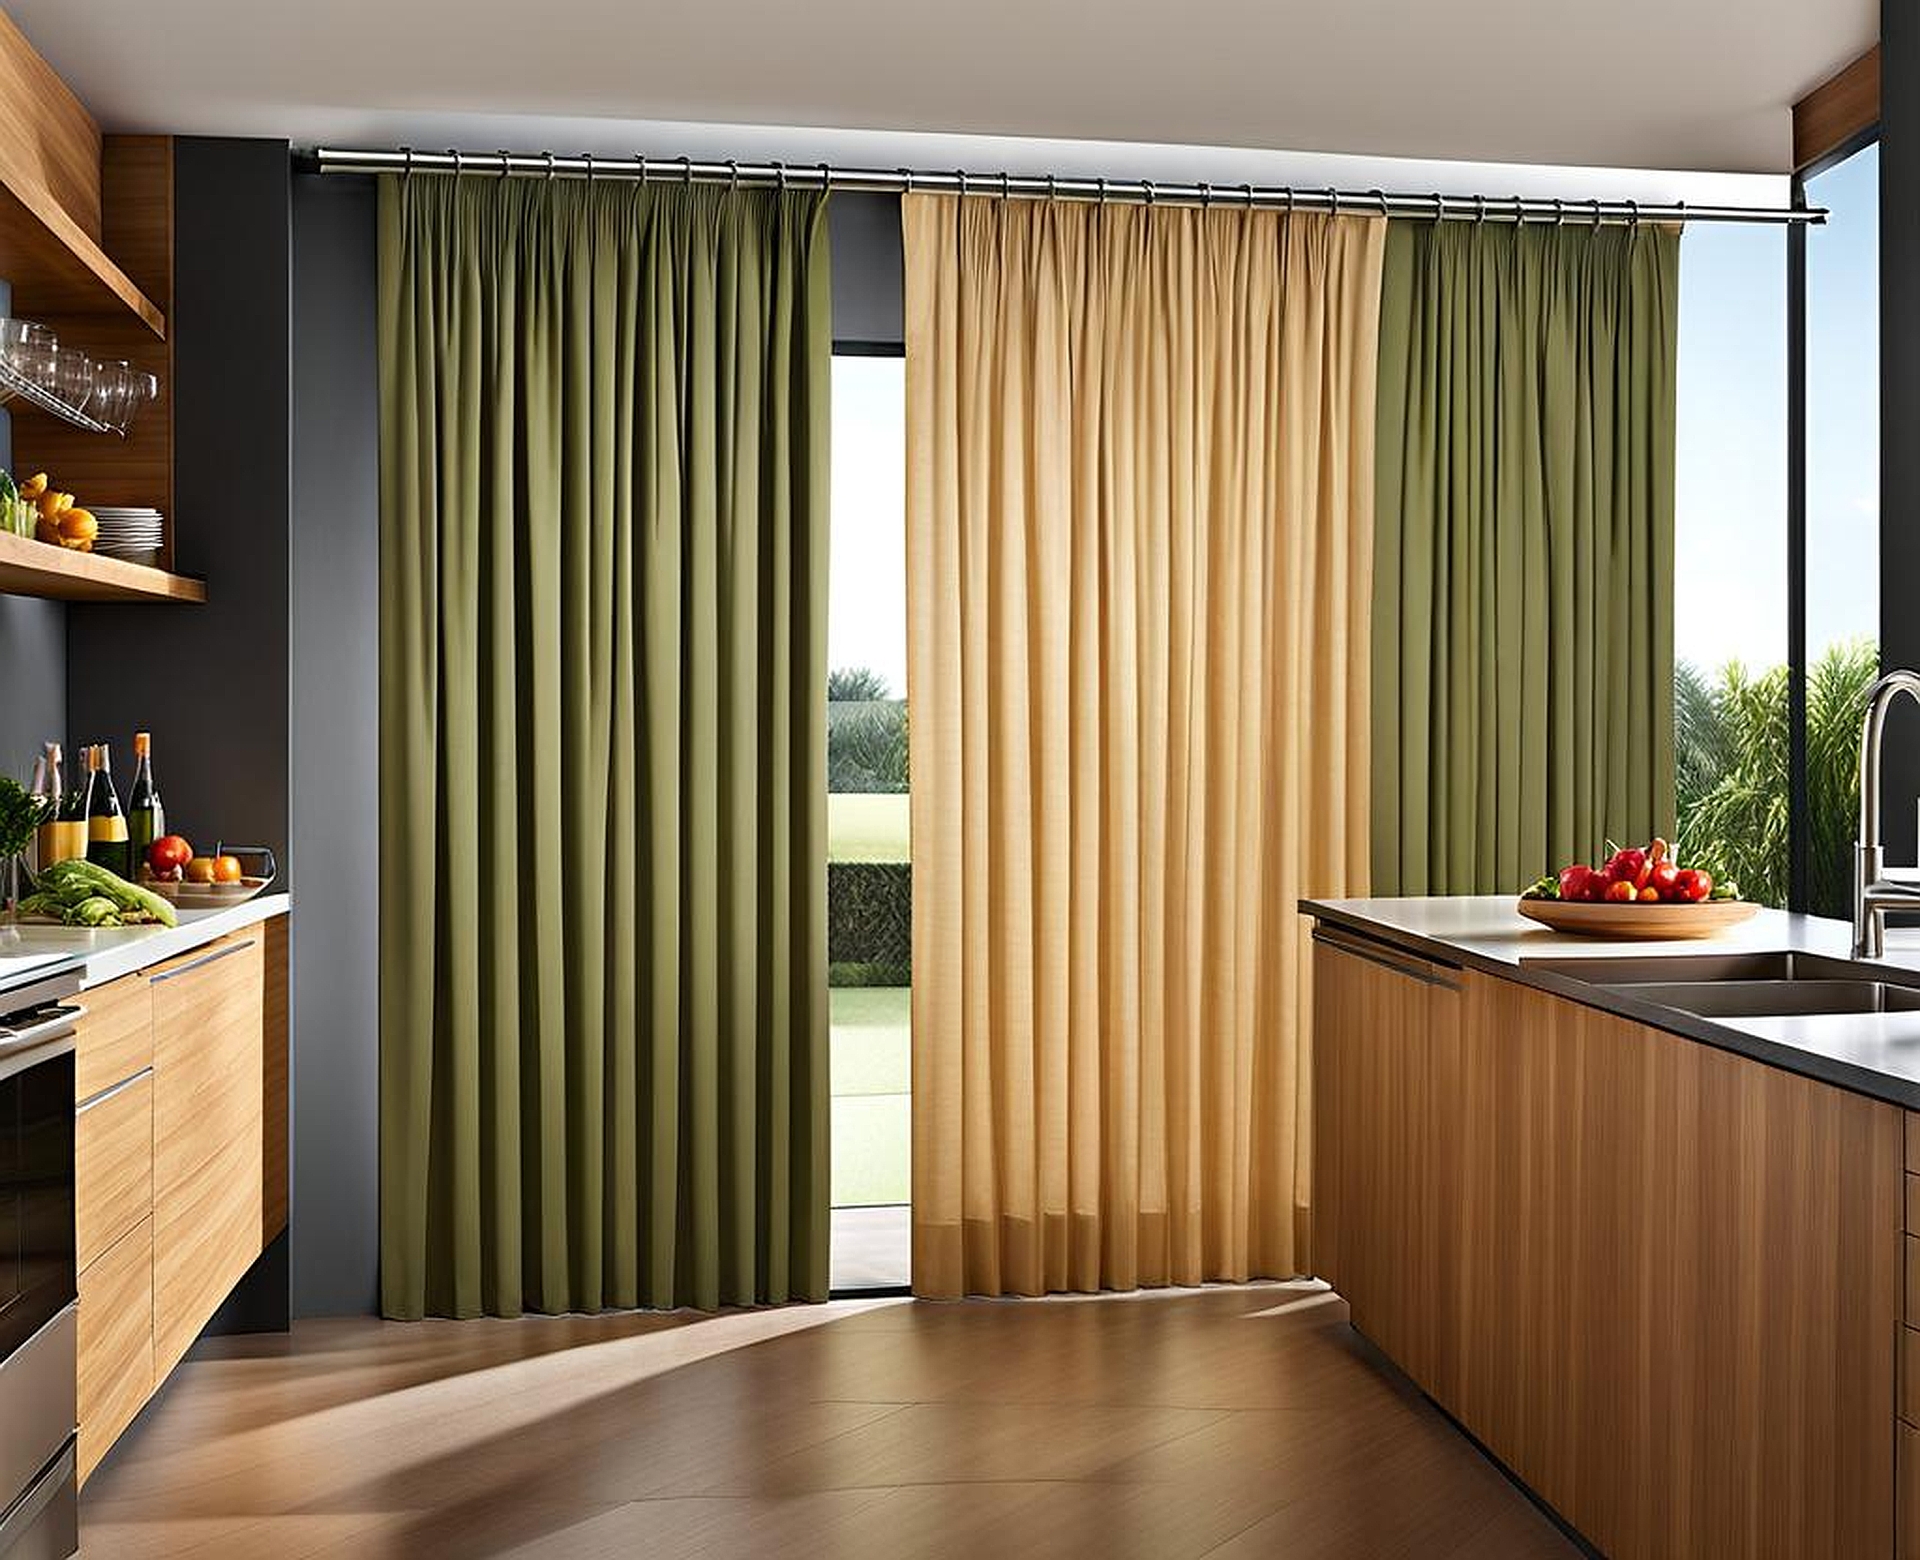 Elegant Curtains for Sliding Glass Doors in Kitchen Design